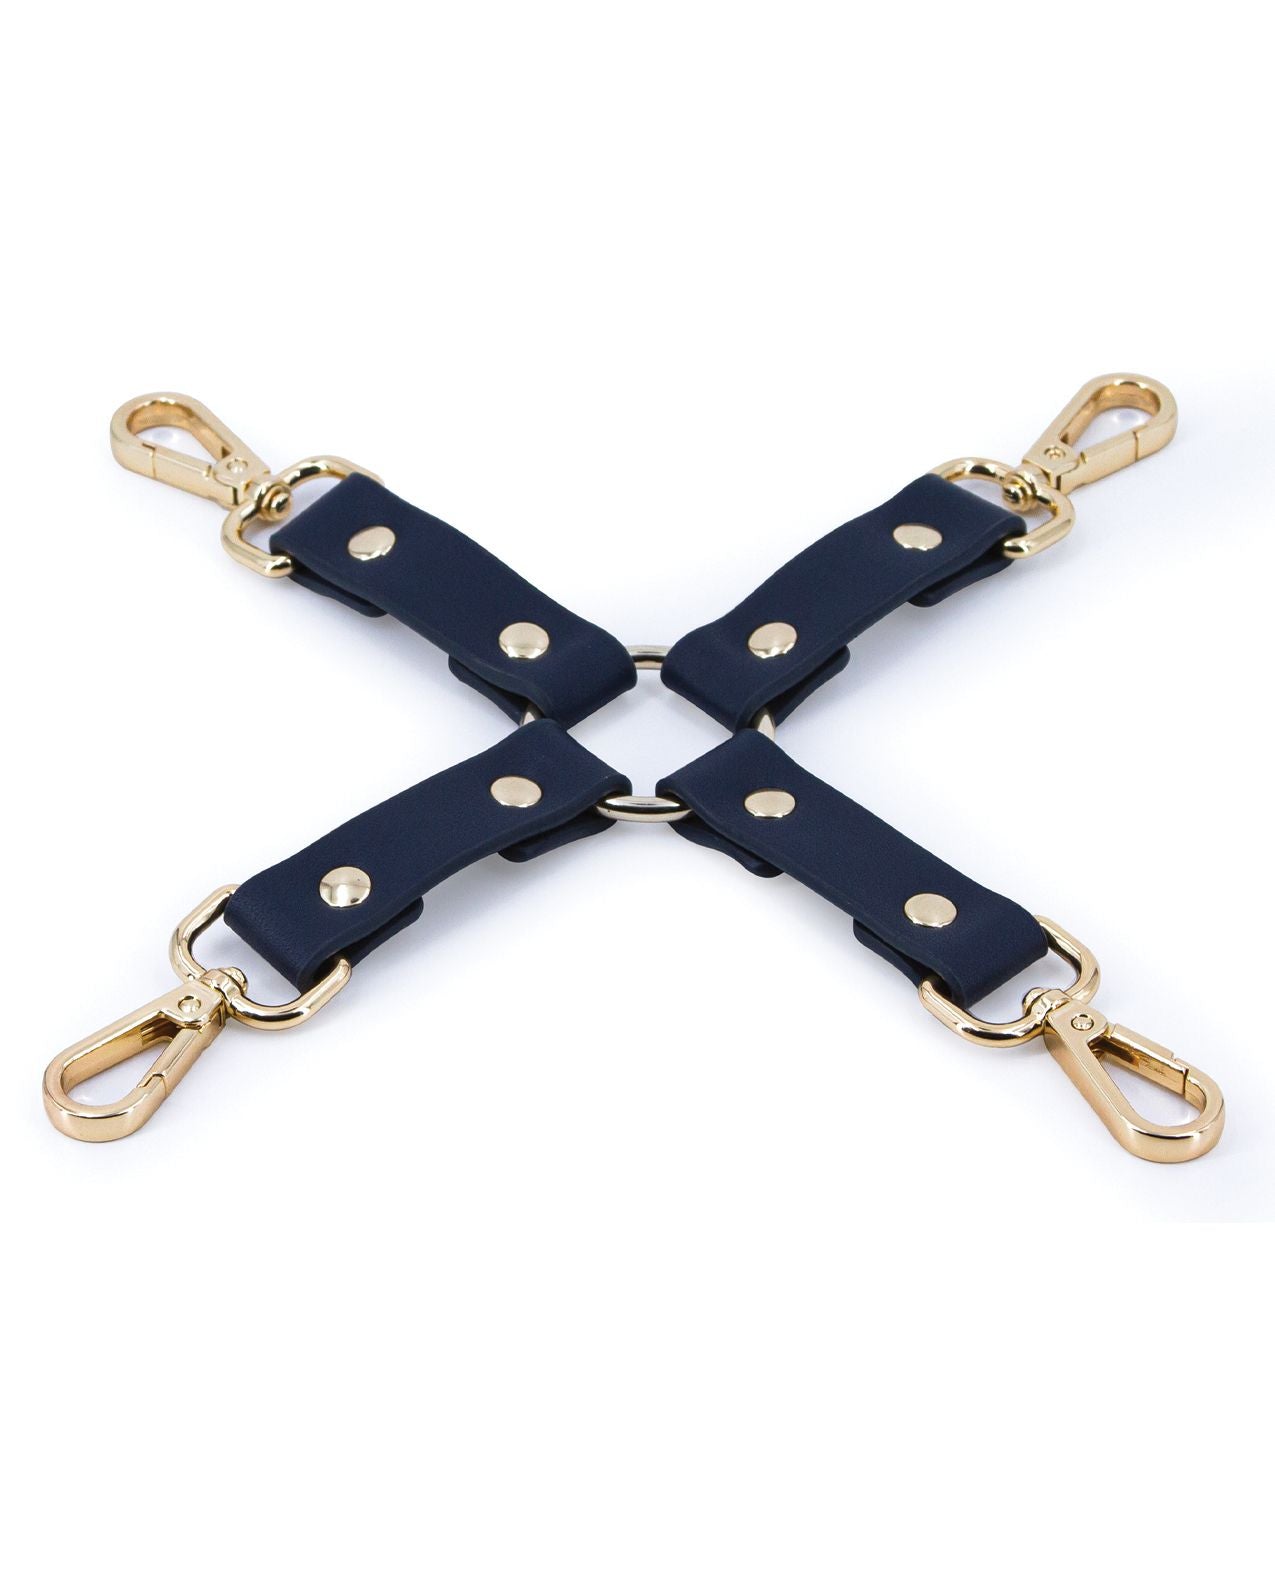 Bondage Couture Hog Tie - Blue Shipmysextoys